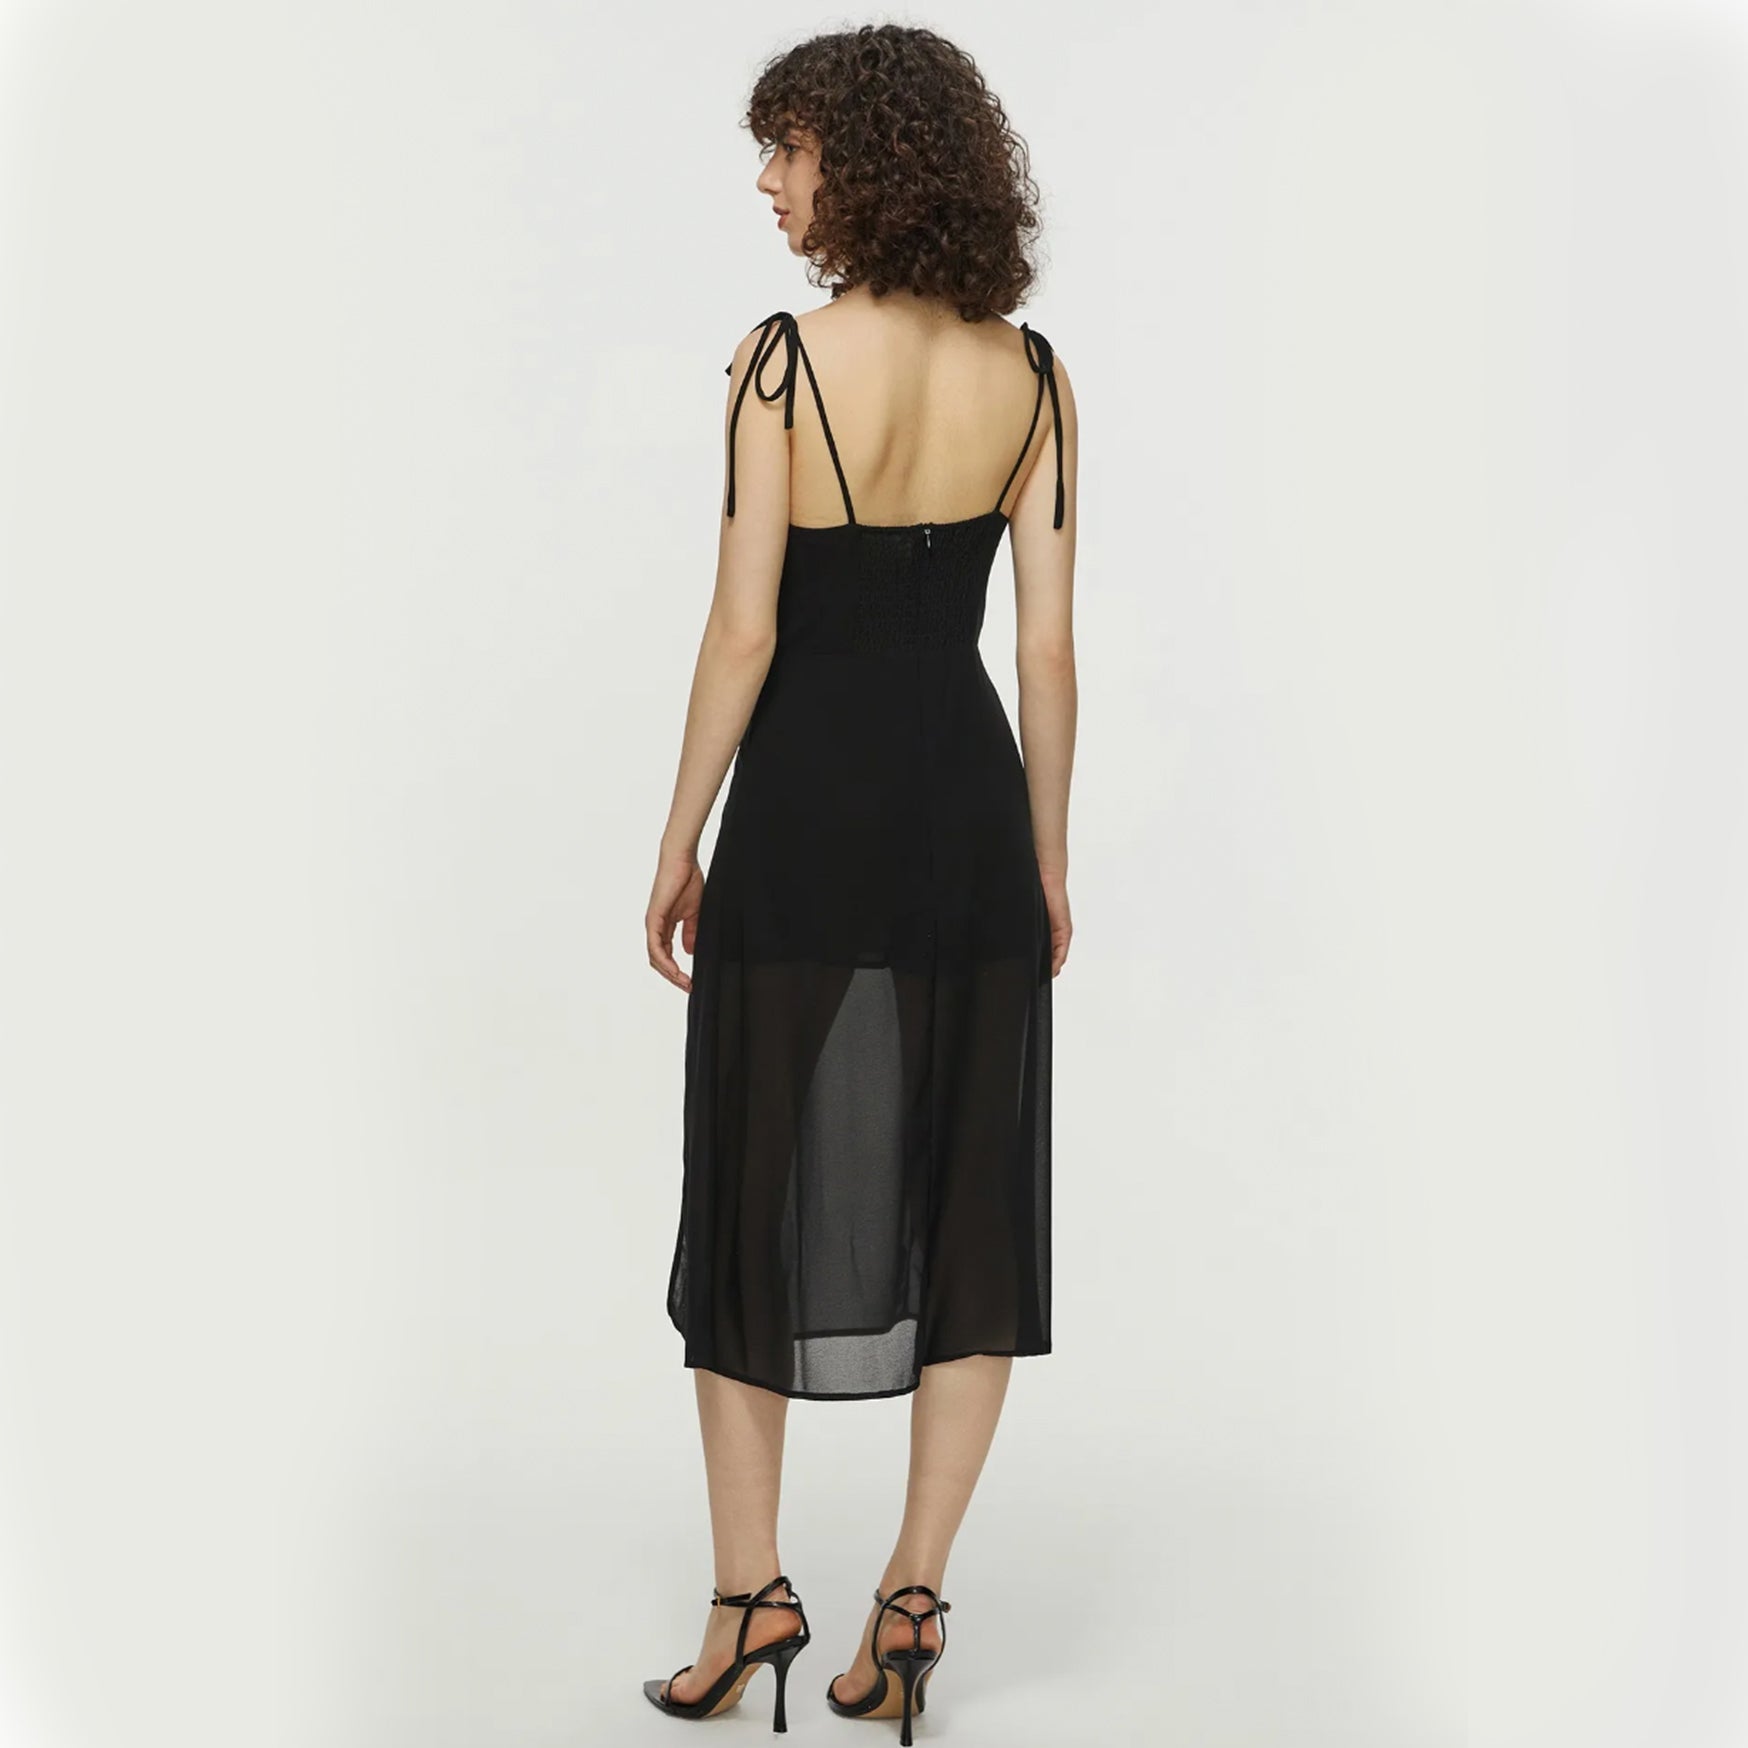 Midi Chiffon Dress With Tied Strap - Black S